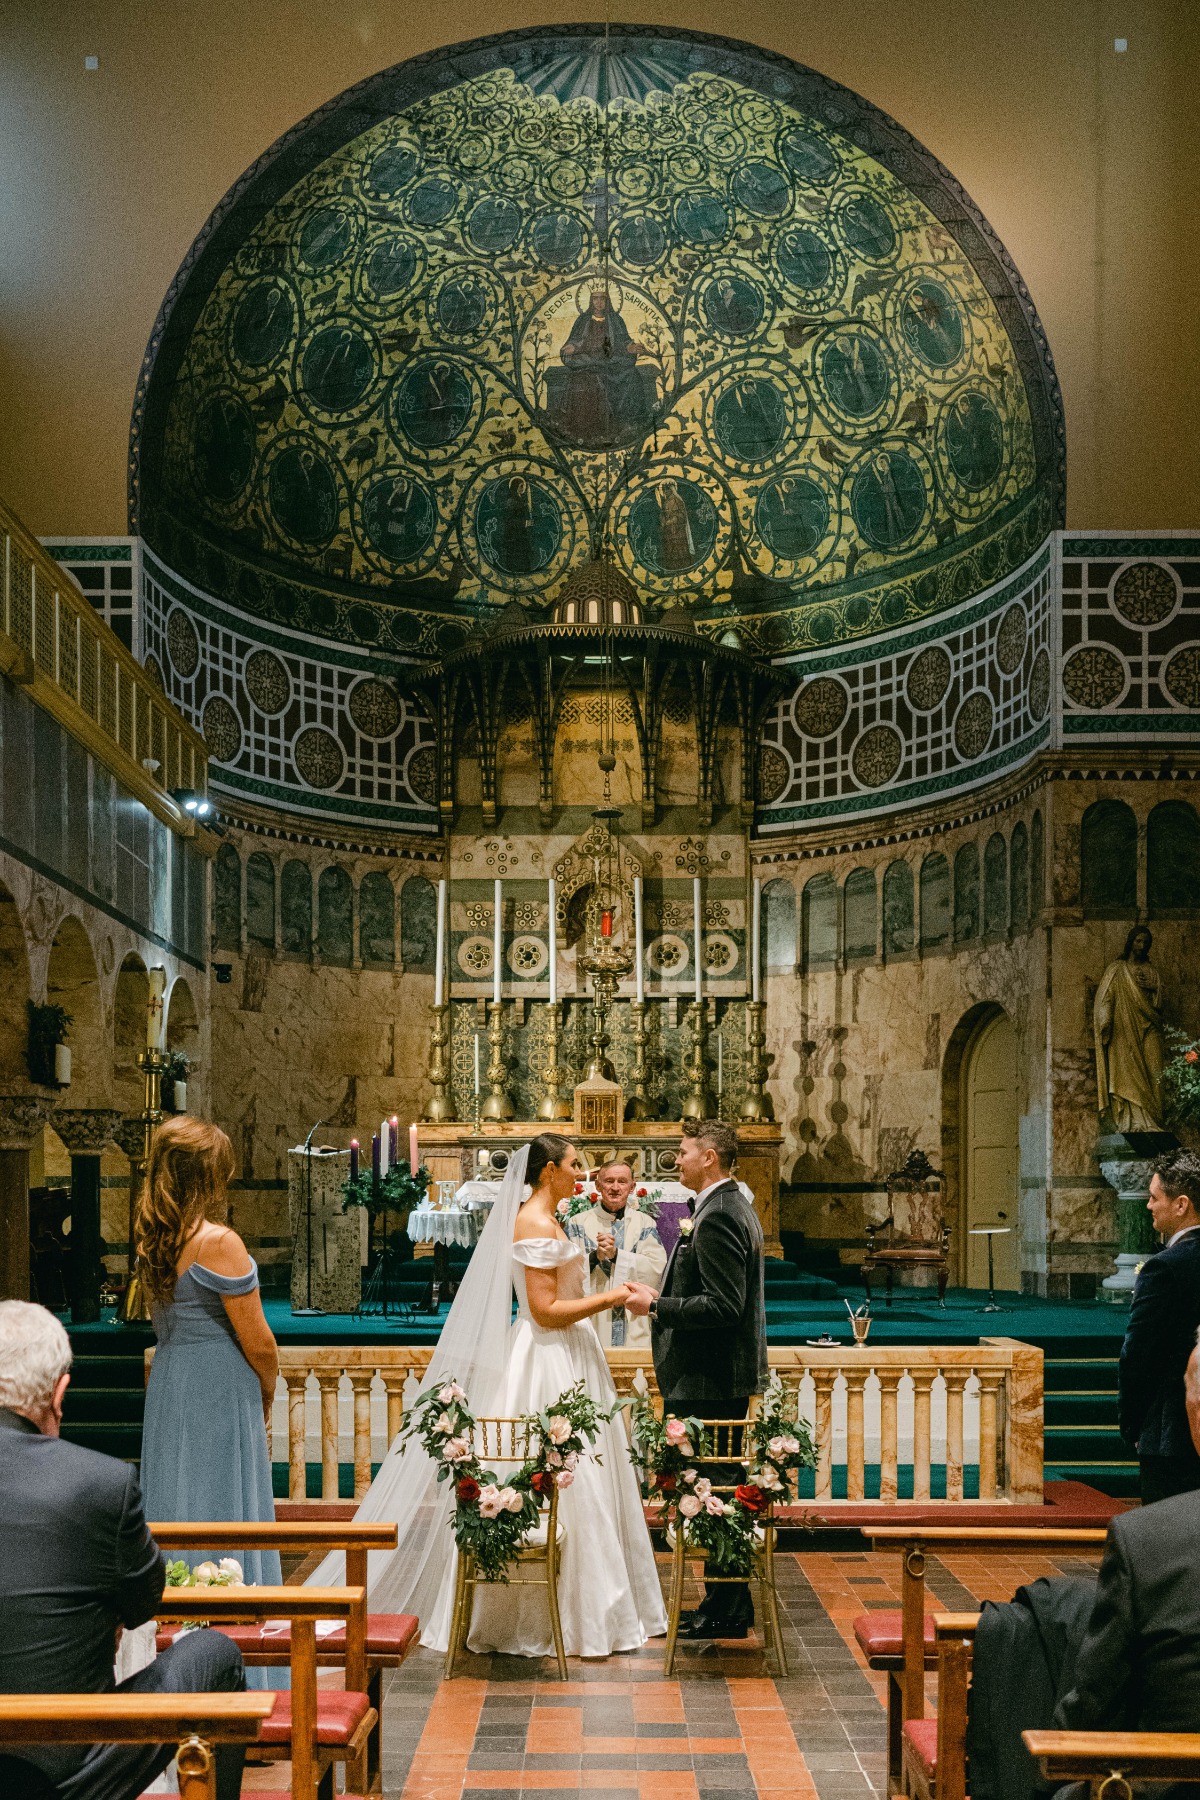 Beautiful church wedding ceremonies